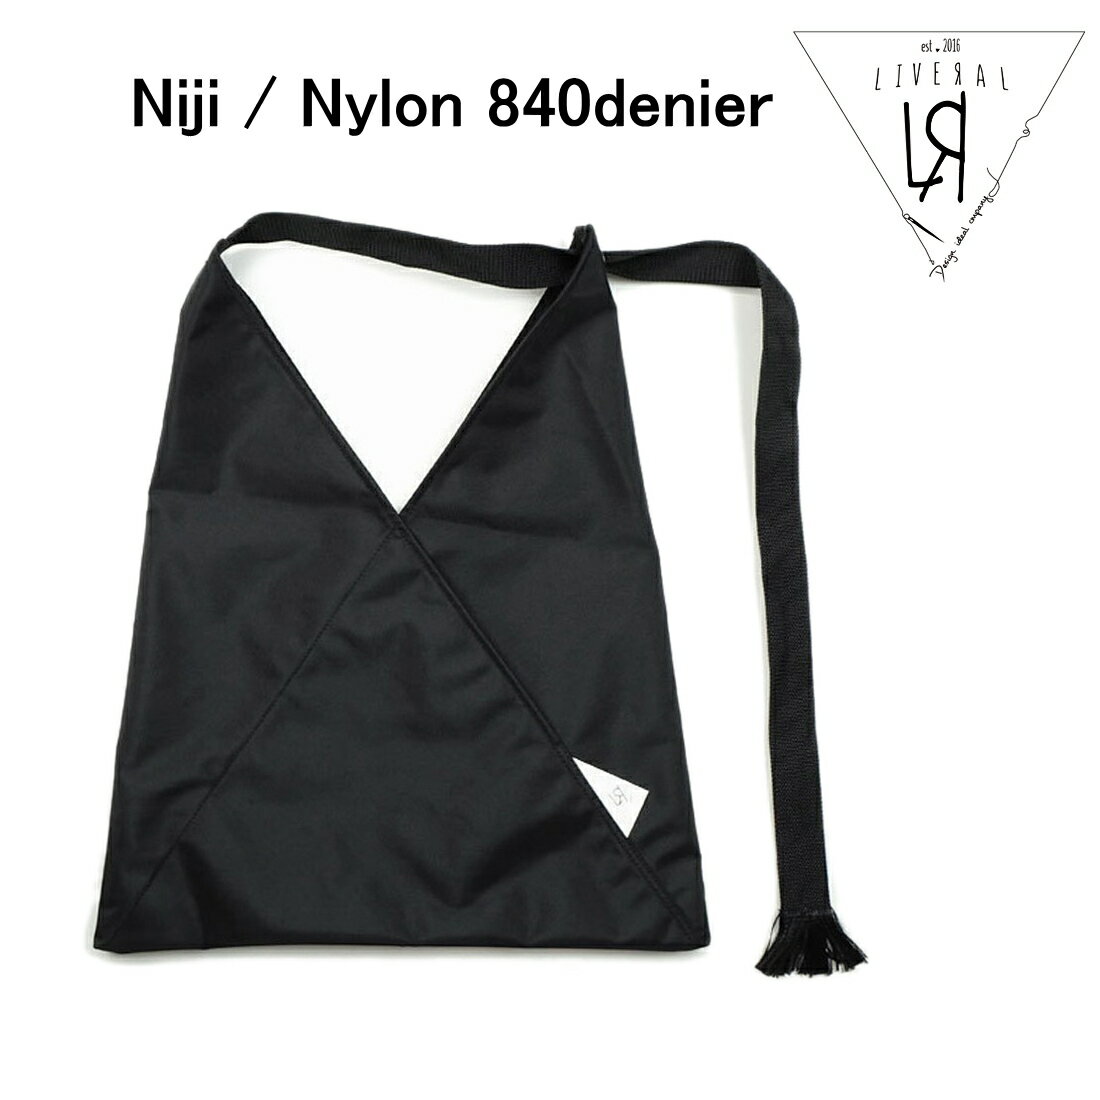 LIVERAL(リベラル) ナイロンショルダーバッグ Niji / トートバッグ ボディバッグ Nylon 840denier